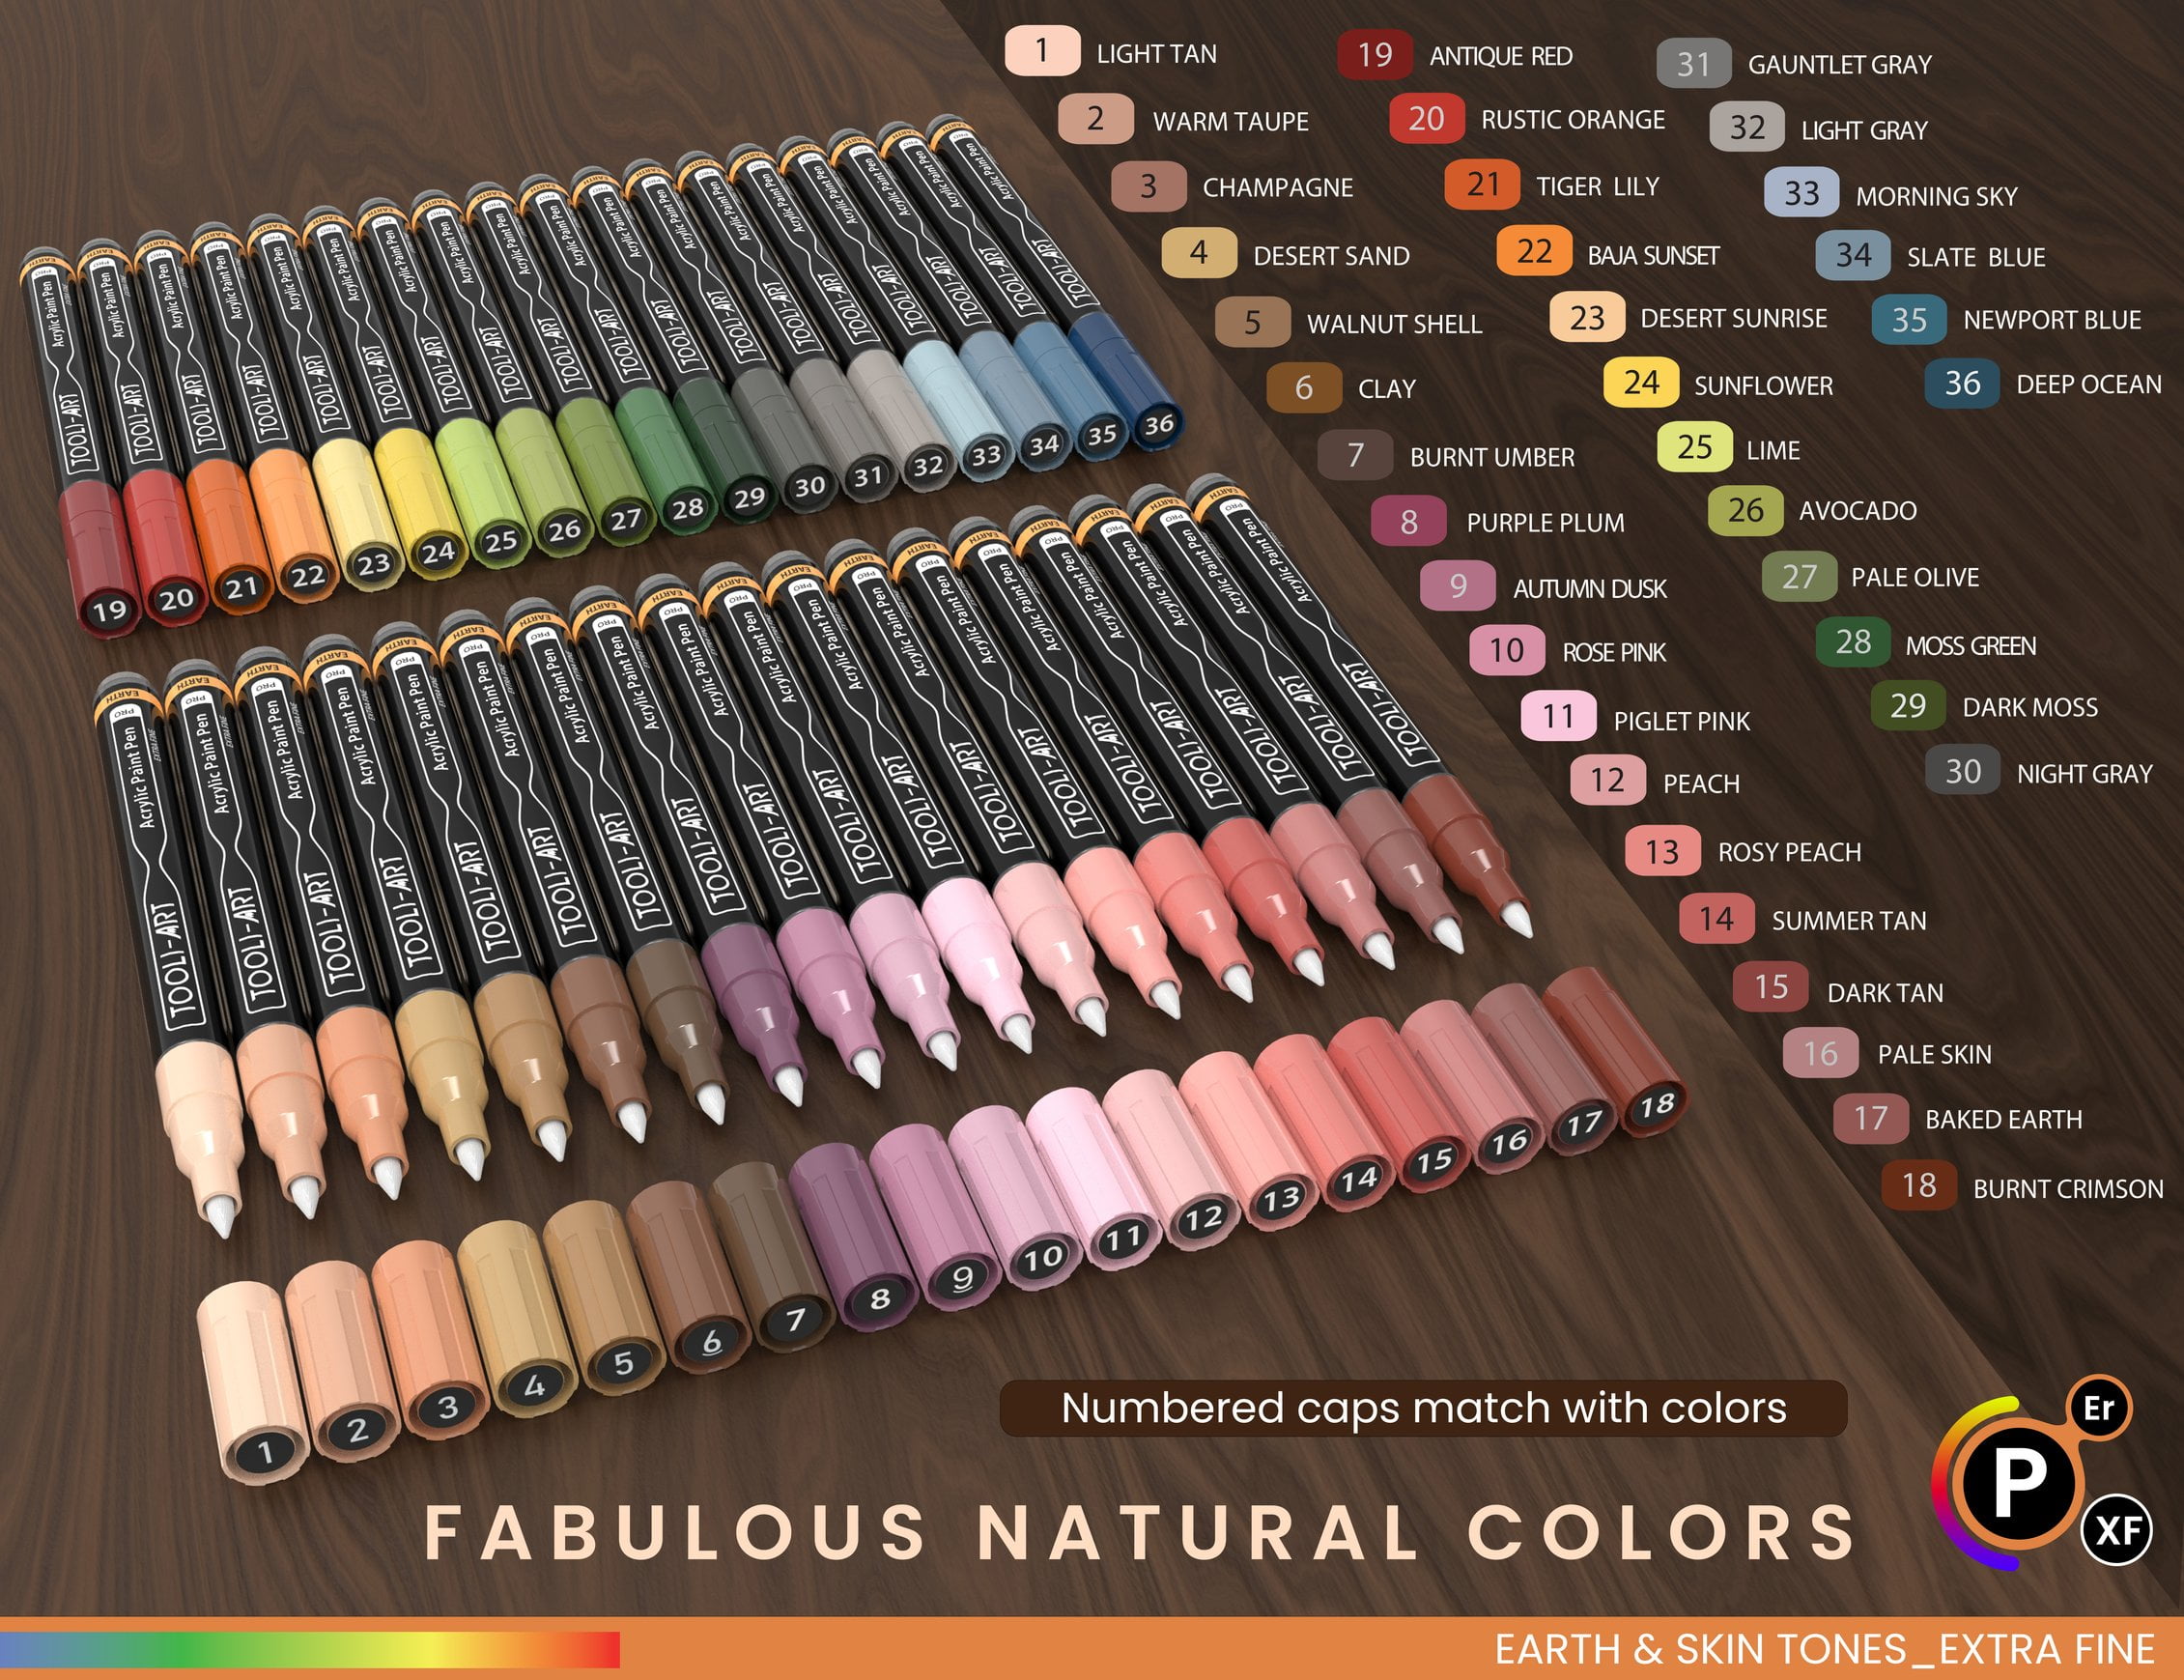 28 Southwestern Colors Acrylic Paint Pens Studio Color Series Markers –  TOOLI-ART